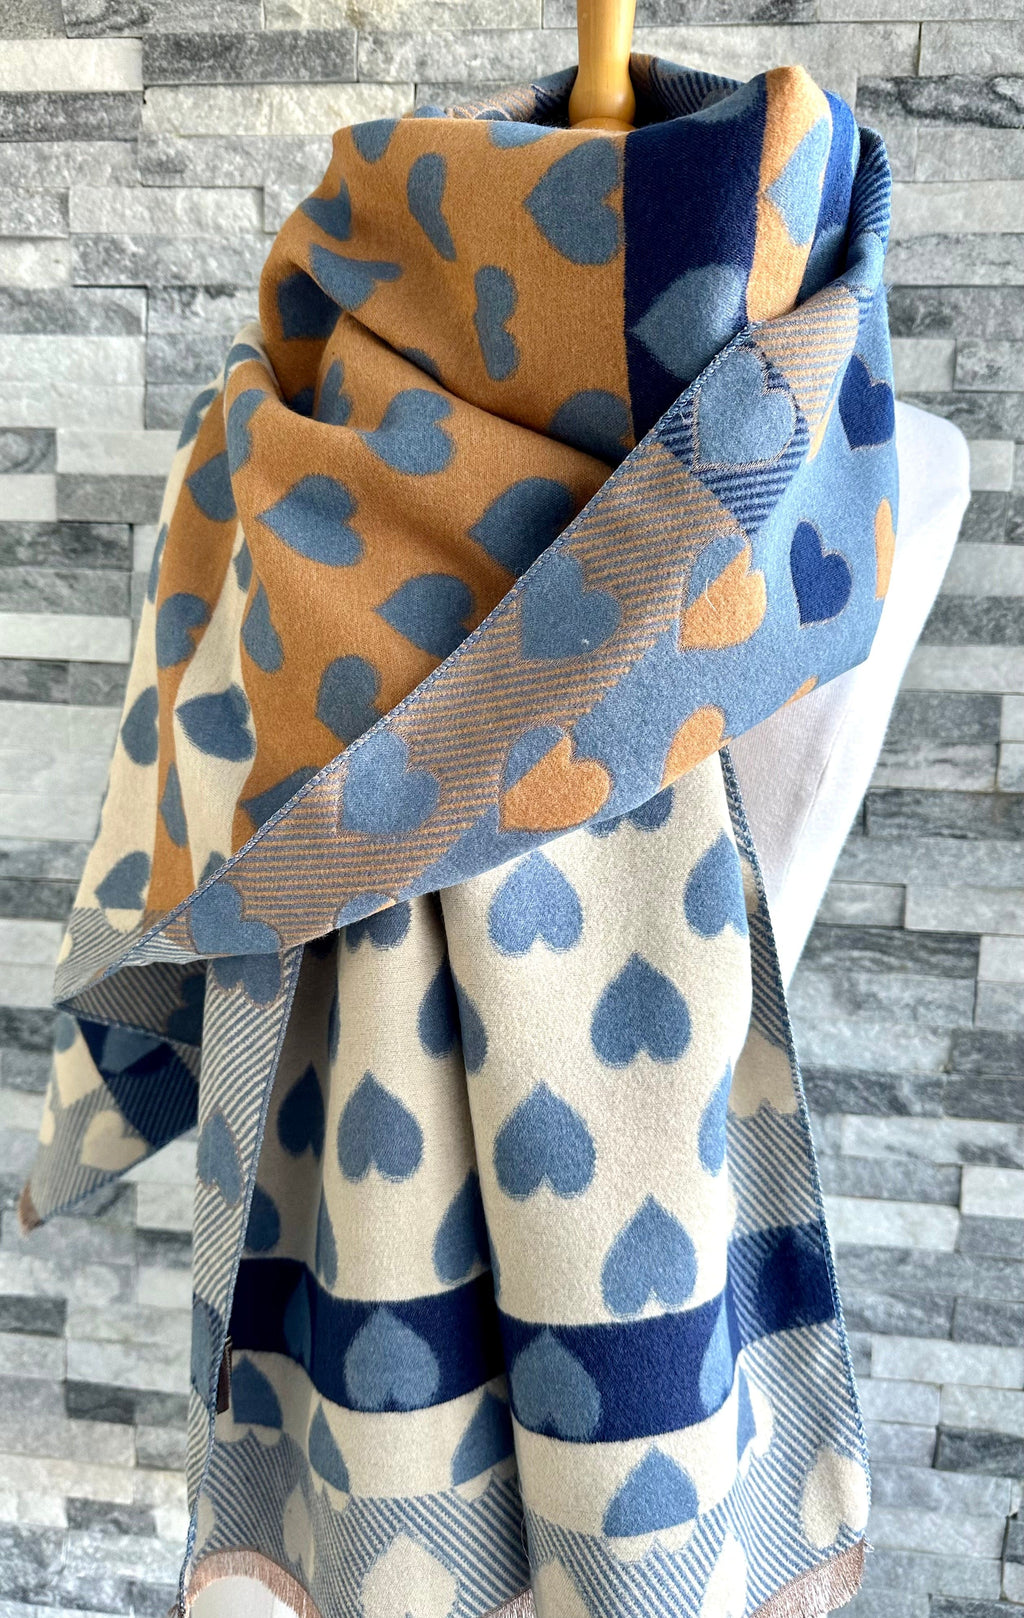 lusciousscarves Blue , Tan and Cream Hearts Design Scarf / Wrap